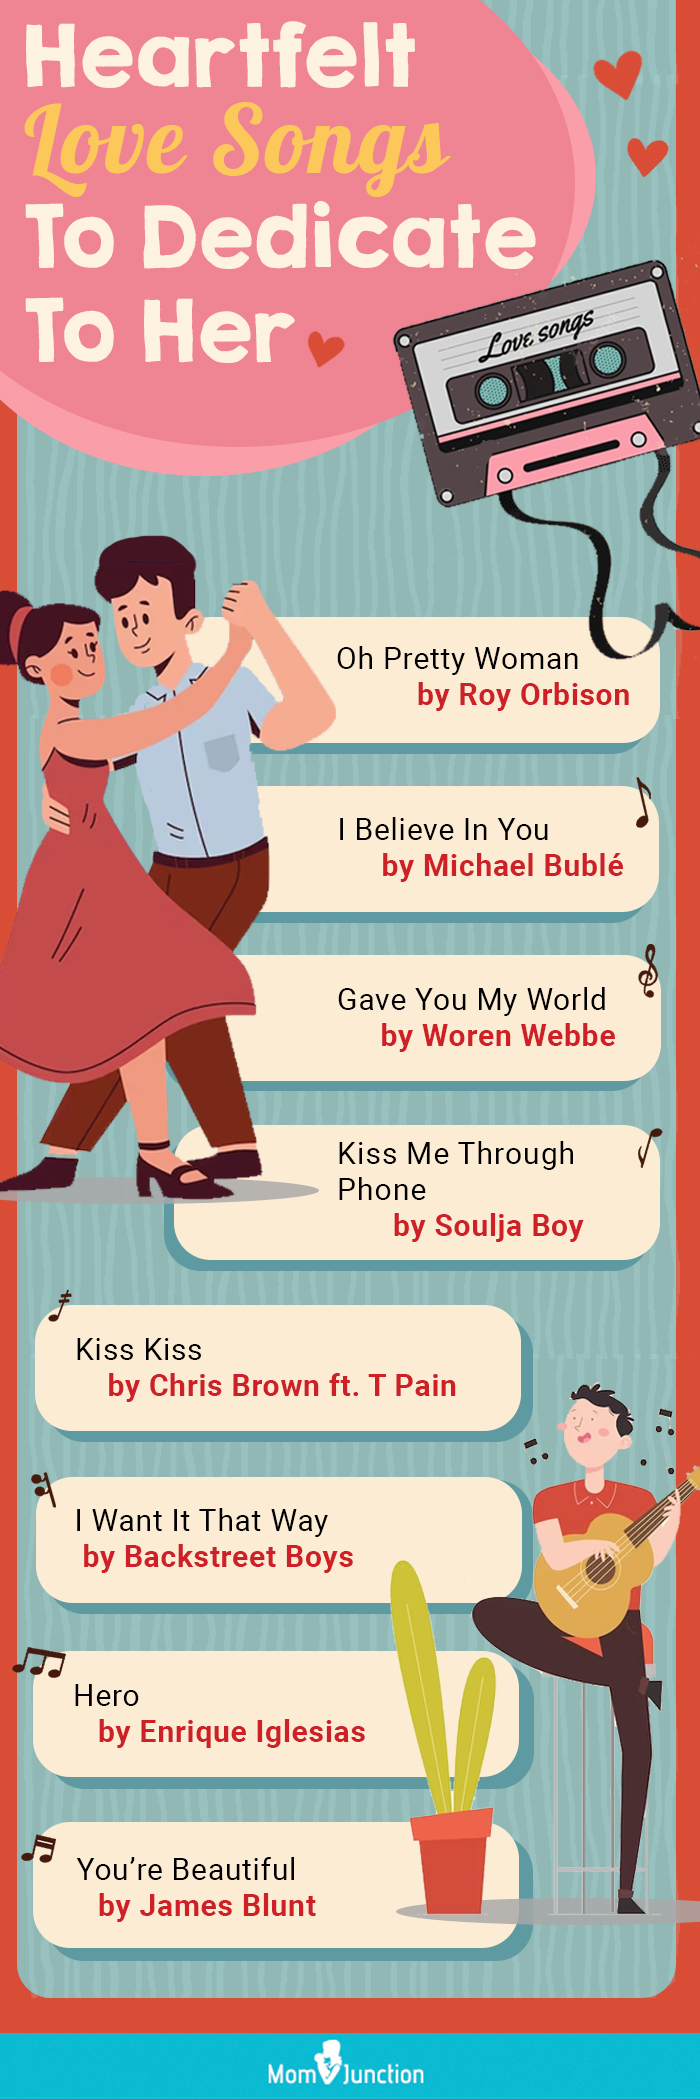 heartfelt love songs to dedicate her (infographic)